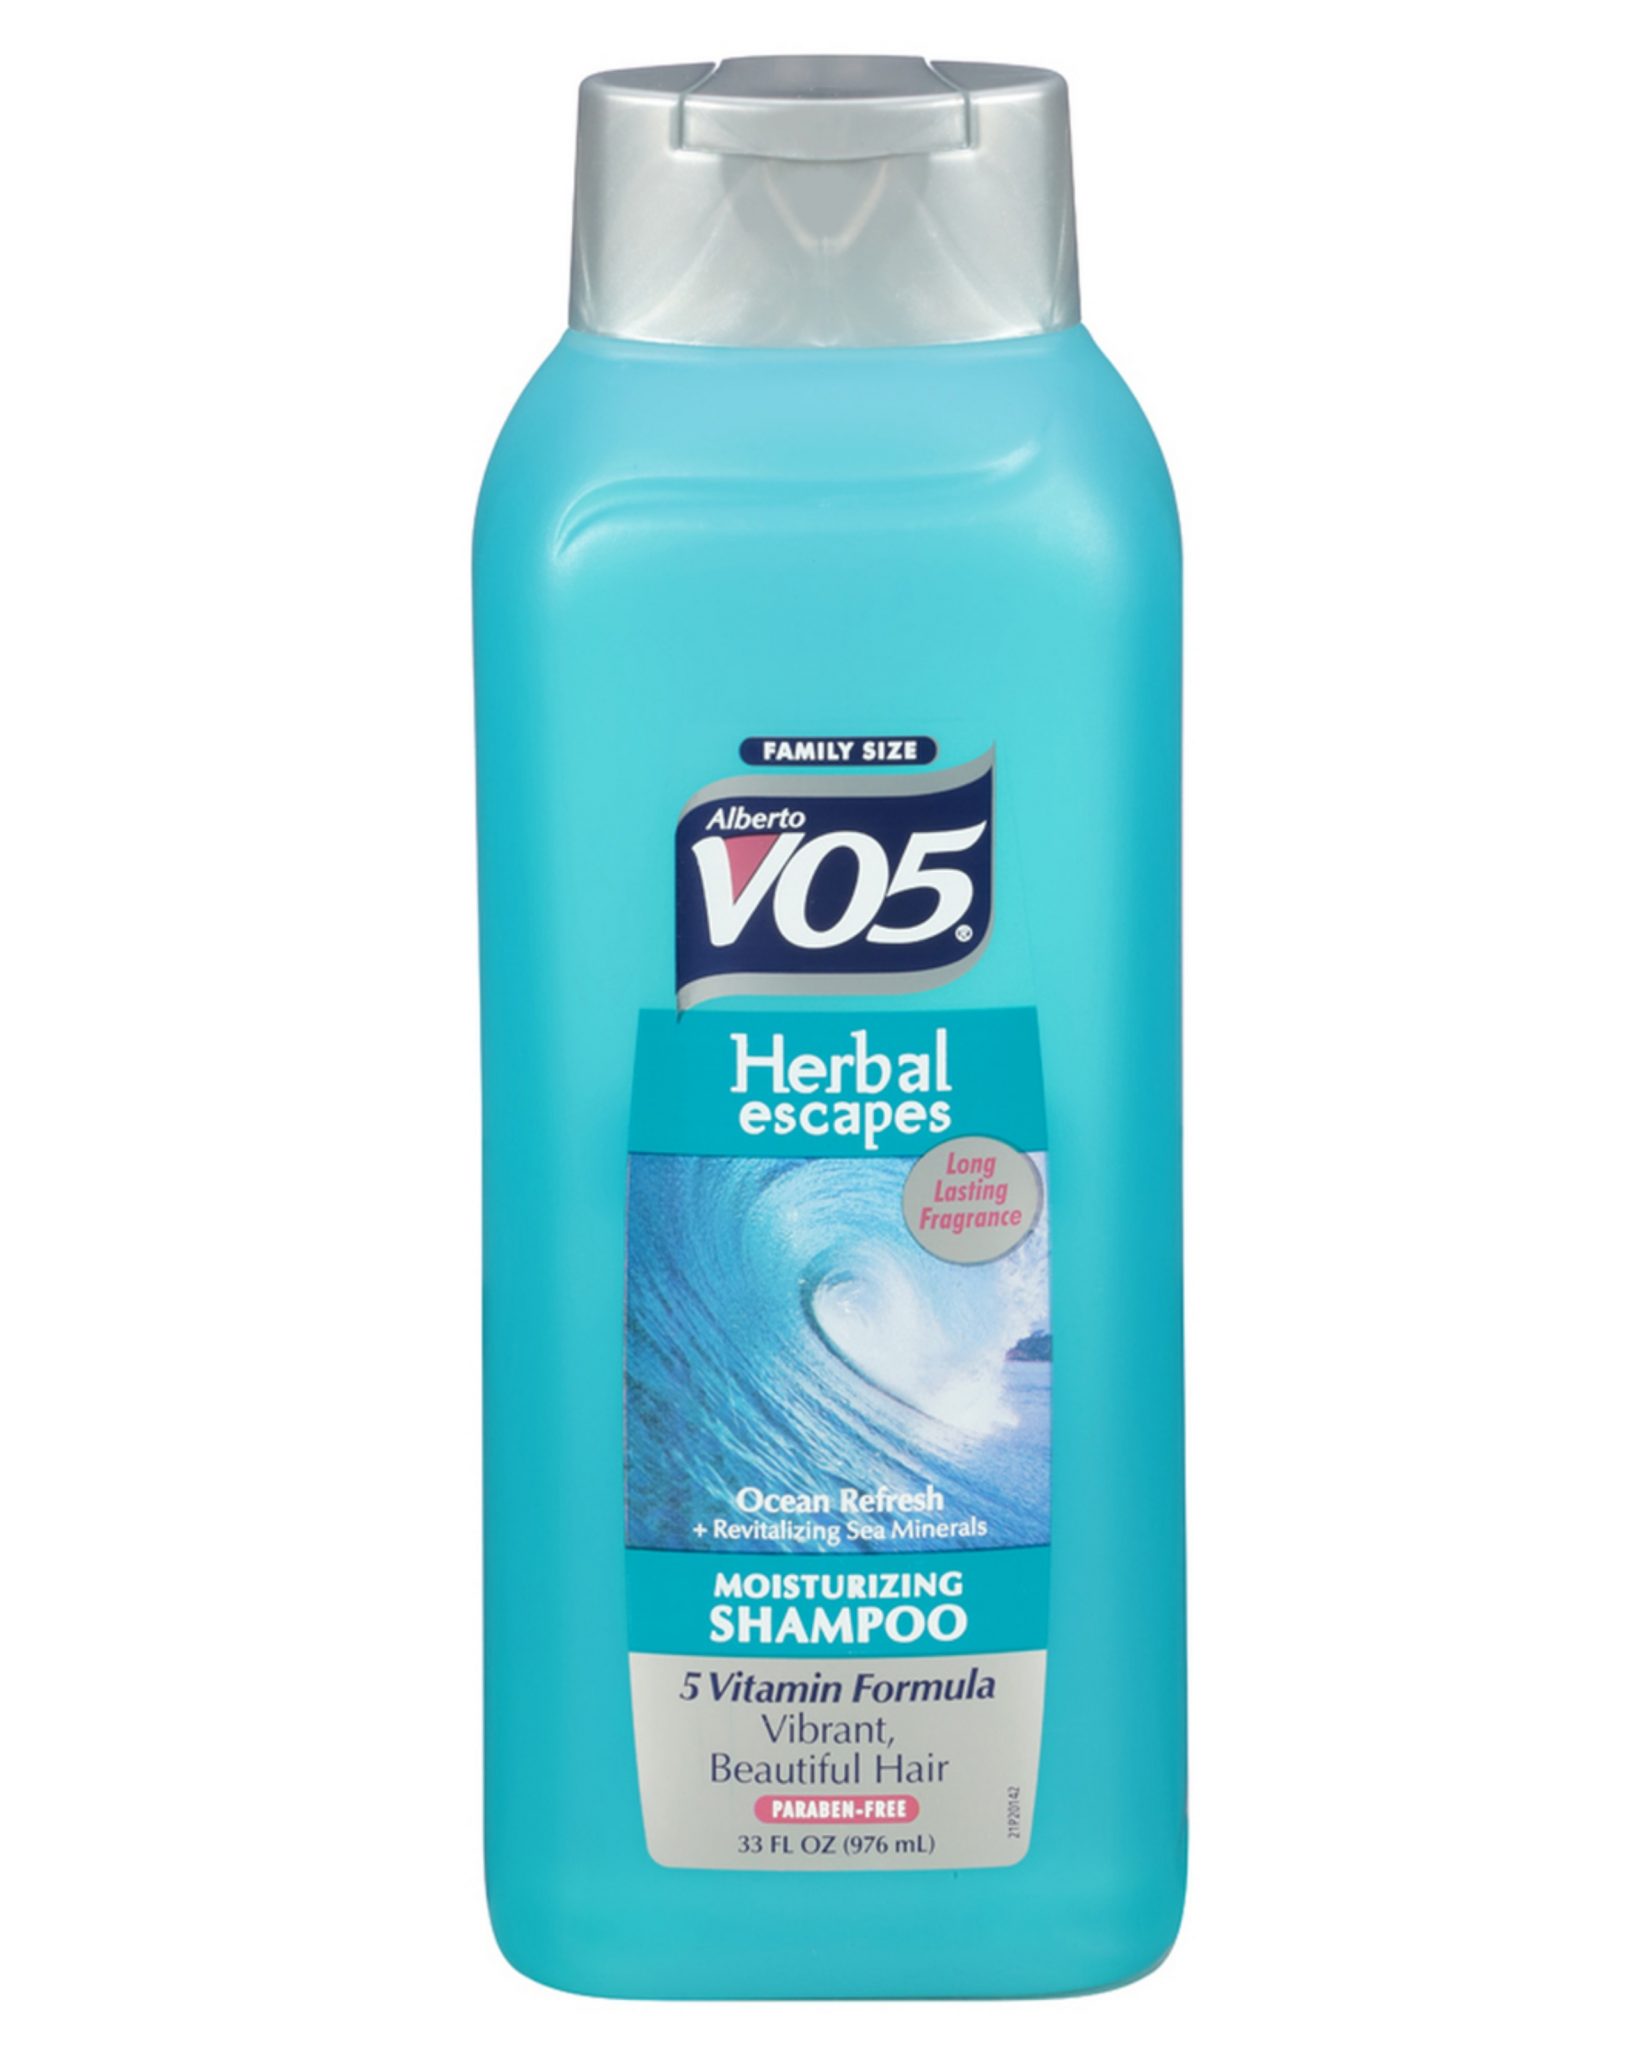 Alberto VO5 Ocean Refresh Moisturizing Shampoo 33Oz